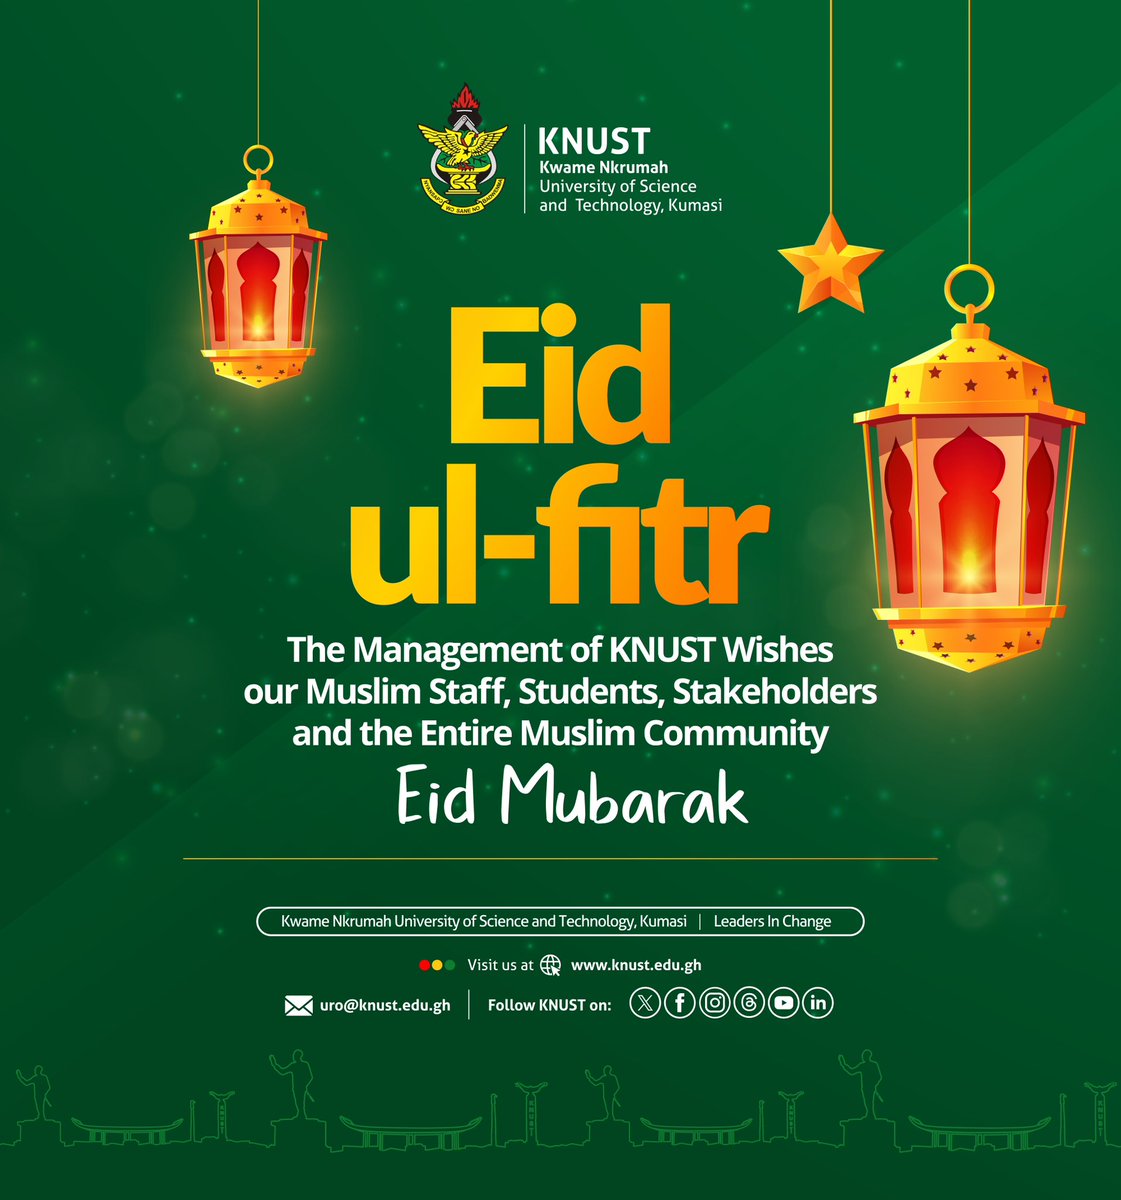 Eid Mubarak to the Muslim Community. May Allah receive your sacrifice of fasting. #knust #knuststaff #knuststudents #EidUlFitr